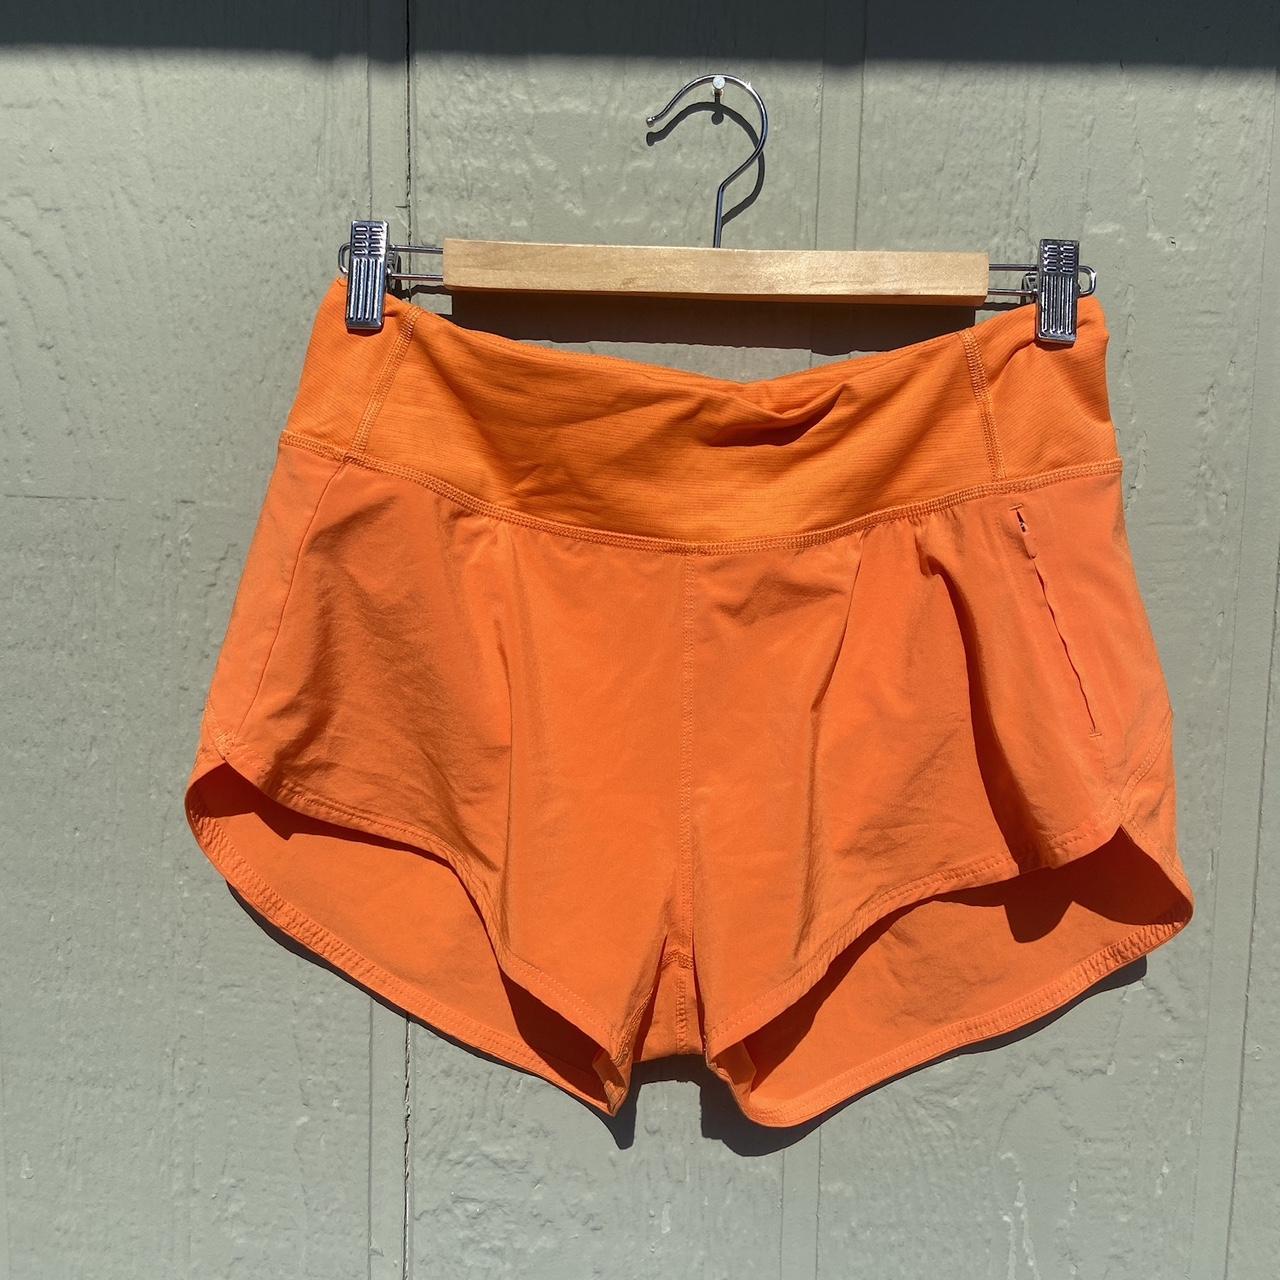 Outdoor voices hudson RARE bright orange shorts size... - Depop